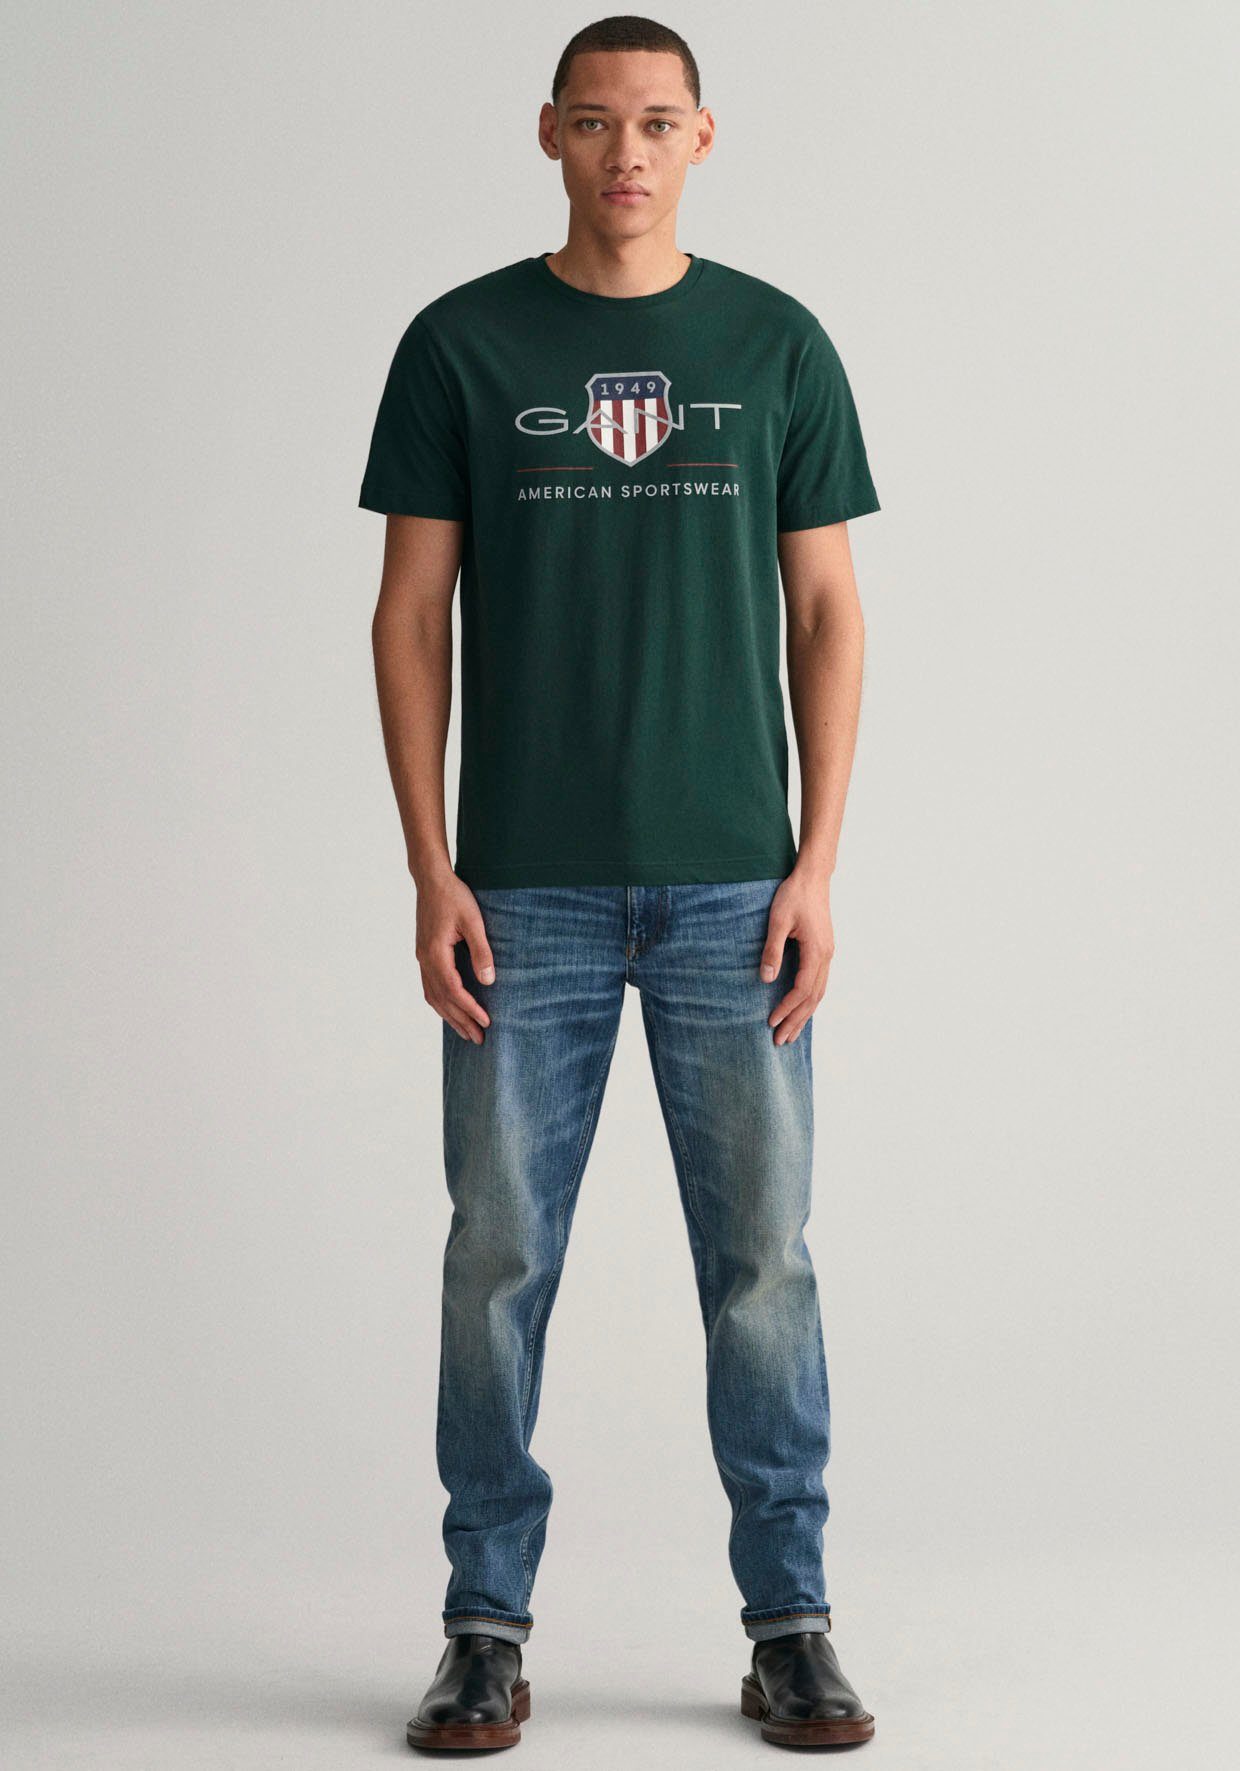 TARTAN GREEN mit REG ARCHIVE Brust SS auf T-Shirt der Logodruck SHIELD Gant T-SHIRT